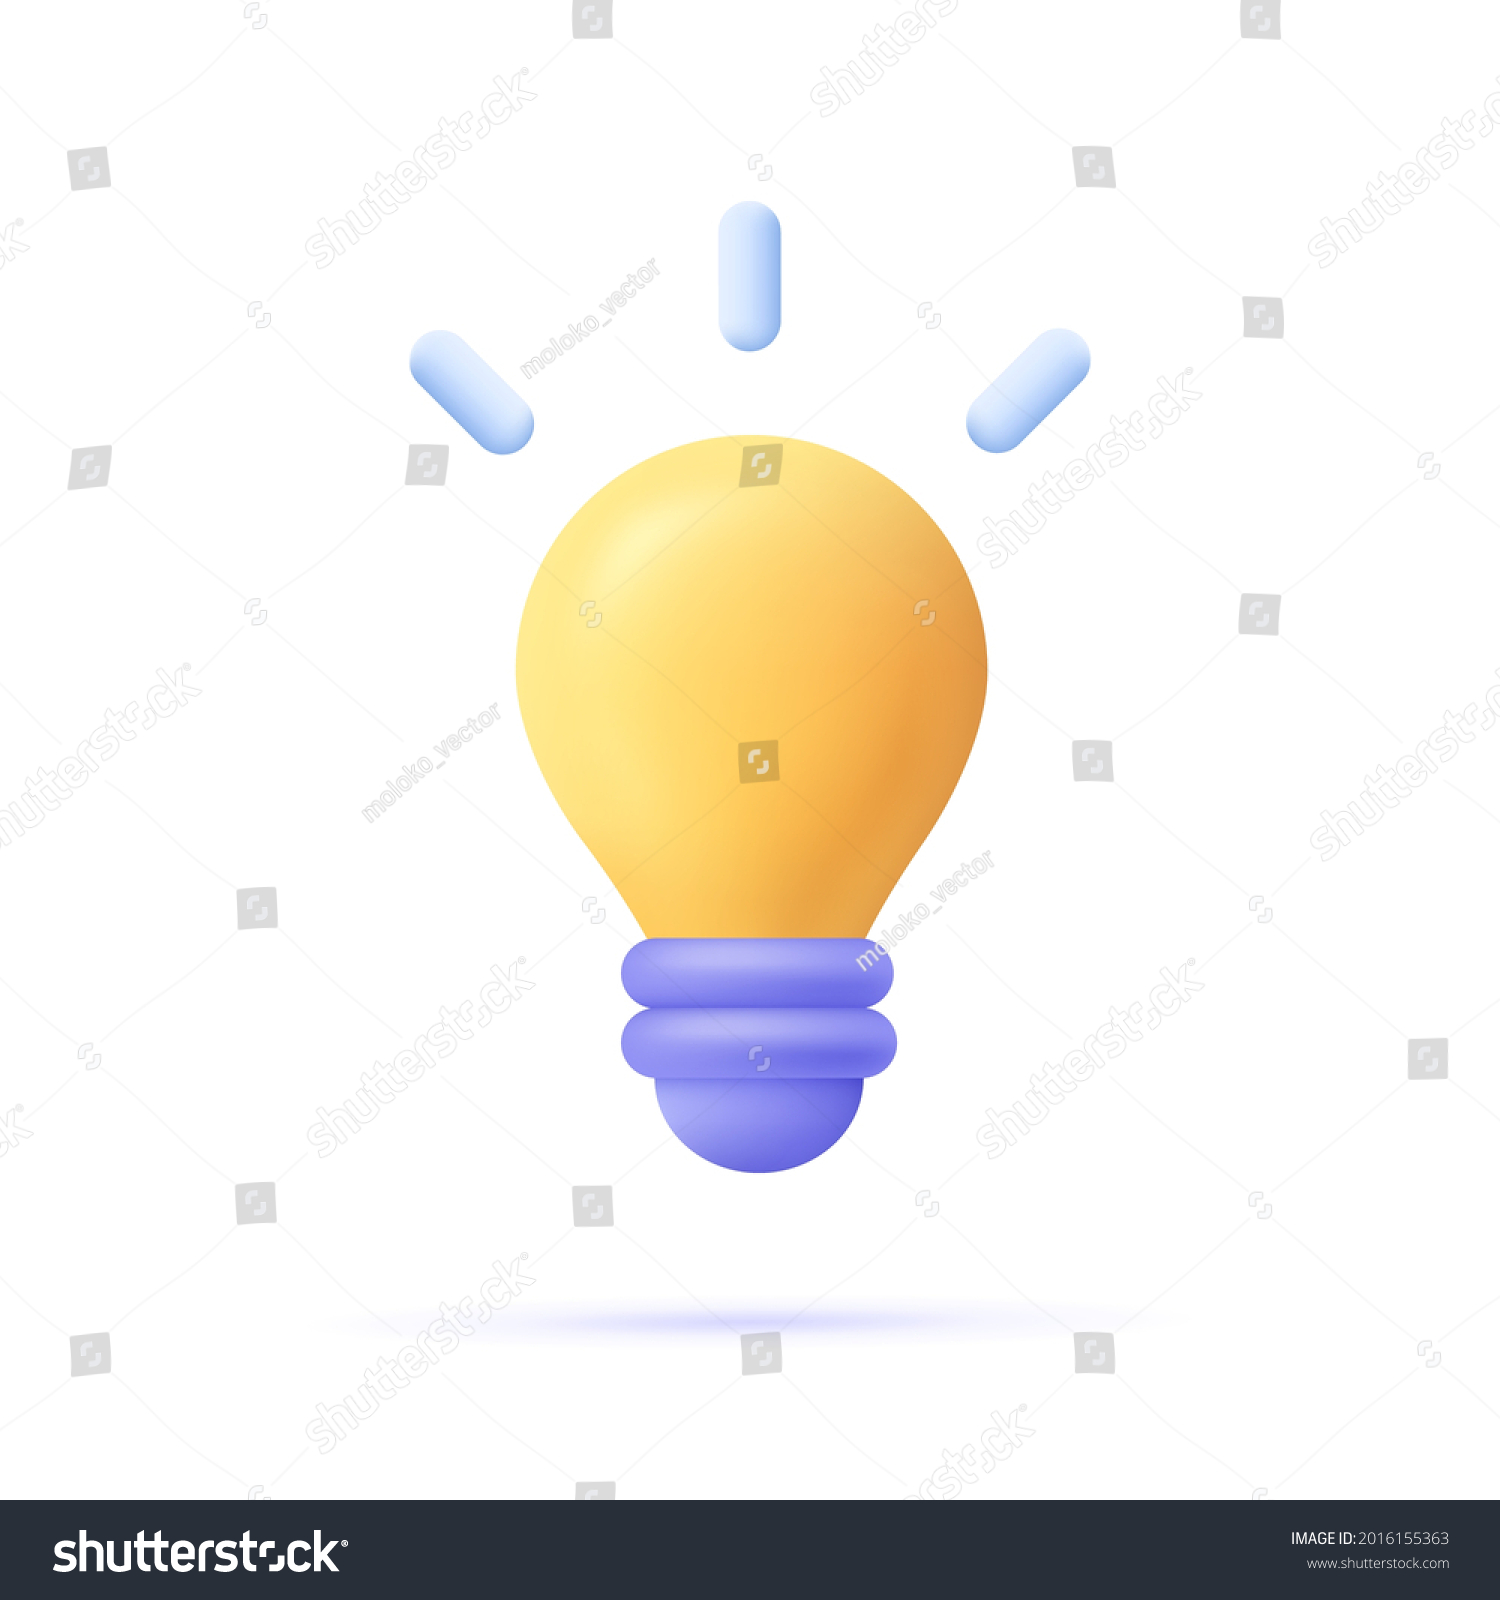 3d cartoon style minimal yellow light bulb icon. Idea, solution, business, strategy concept.  #2016155363